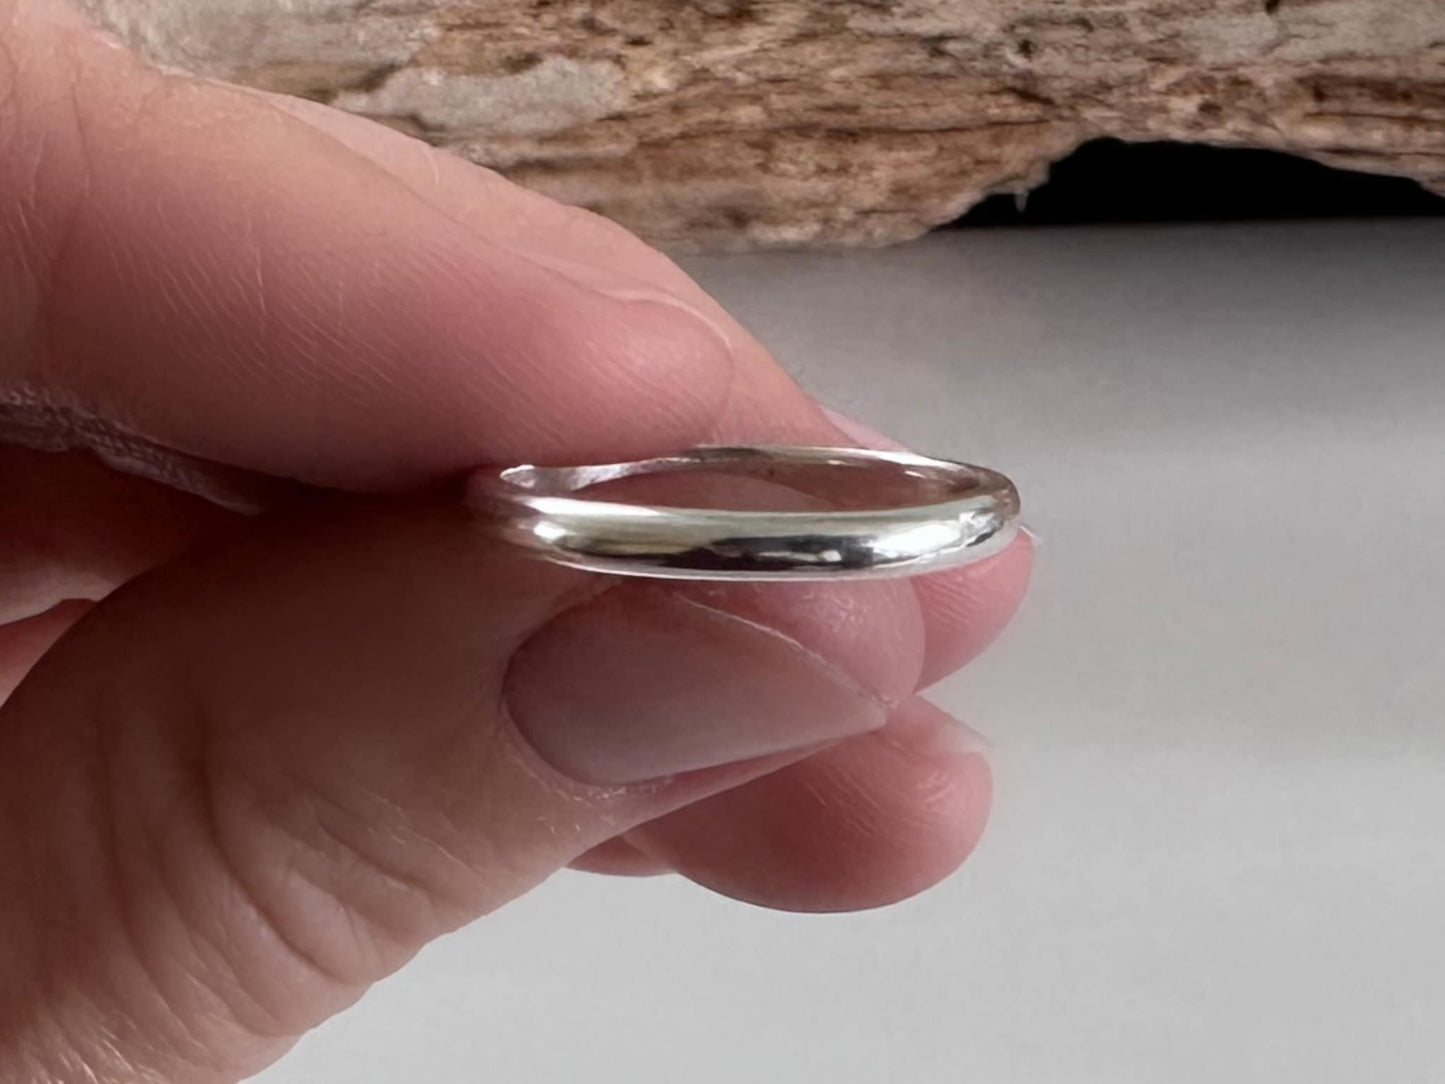 925 Sterling Silver Smooth and Shiny D Shaped Ring, Plain Minimalist Ring Band, Handmade Stacking Ring, Thumb Ring, Wedding Ring